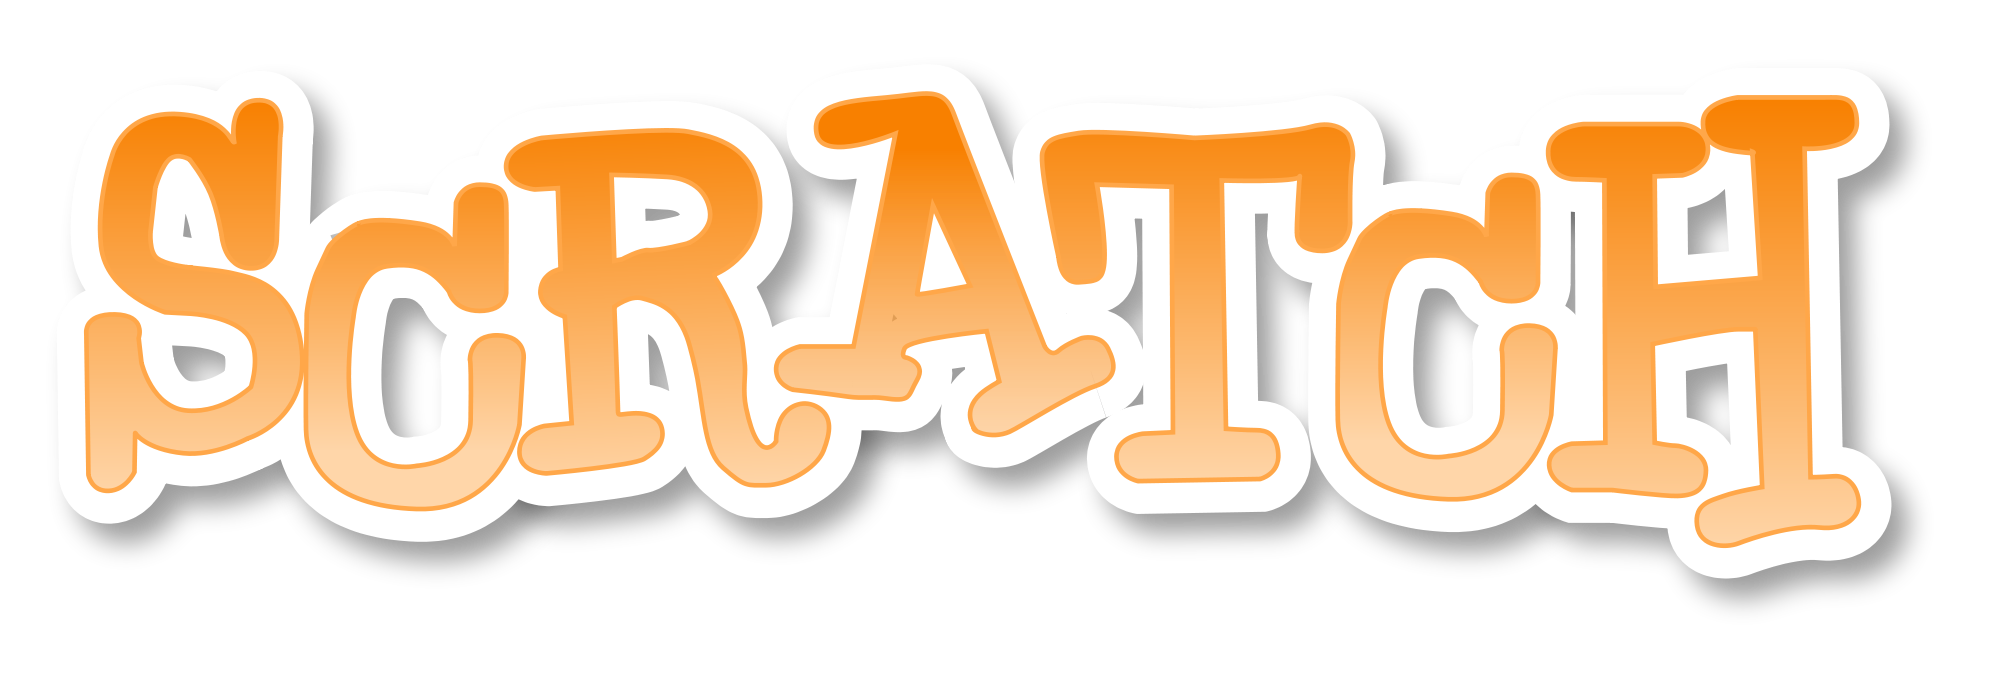 Scratchers Logo photo - 1